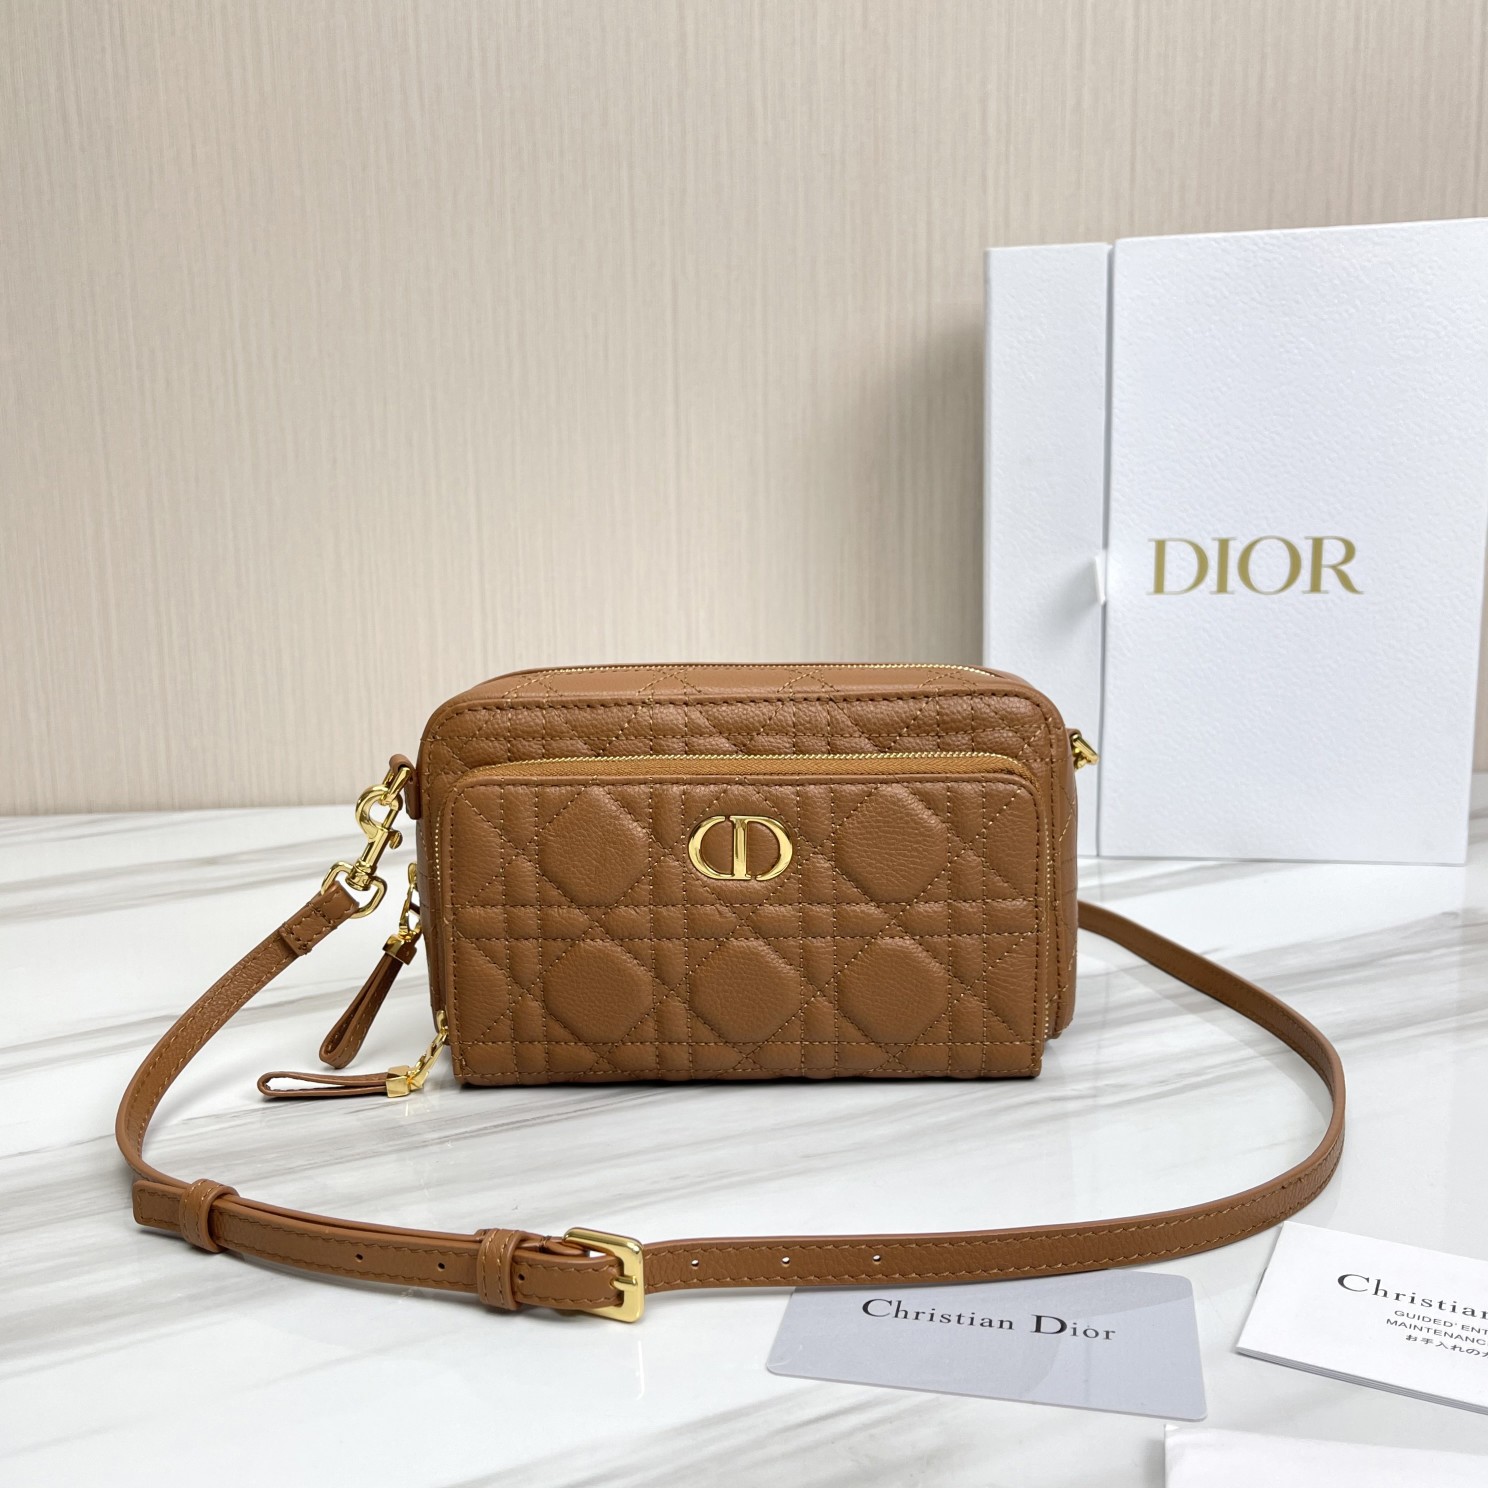 Dior Double clutch bag